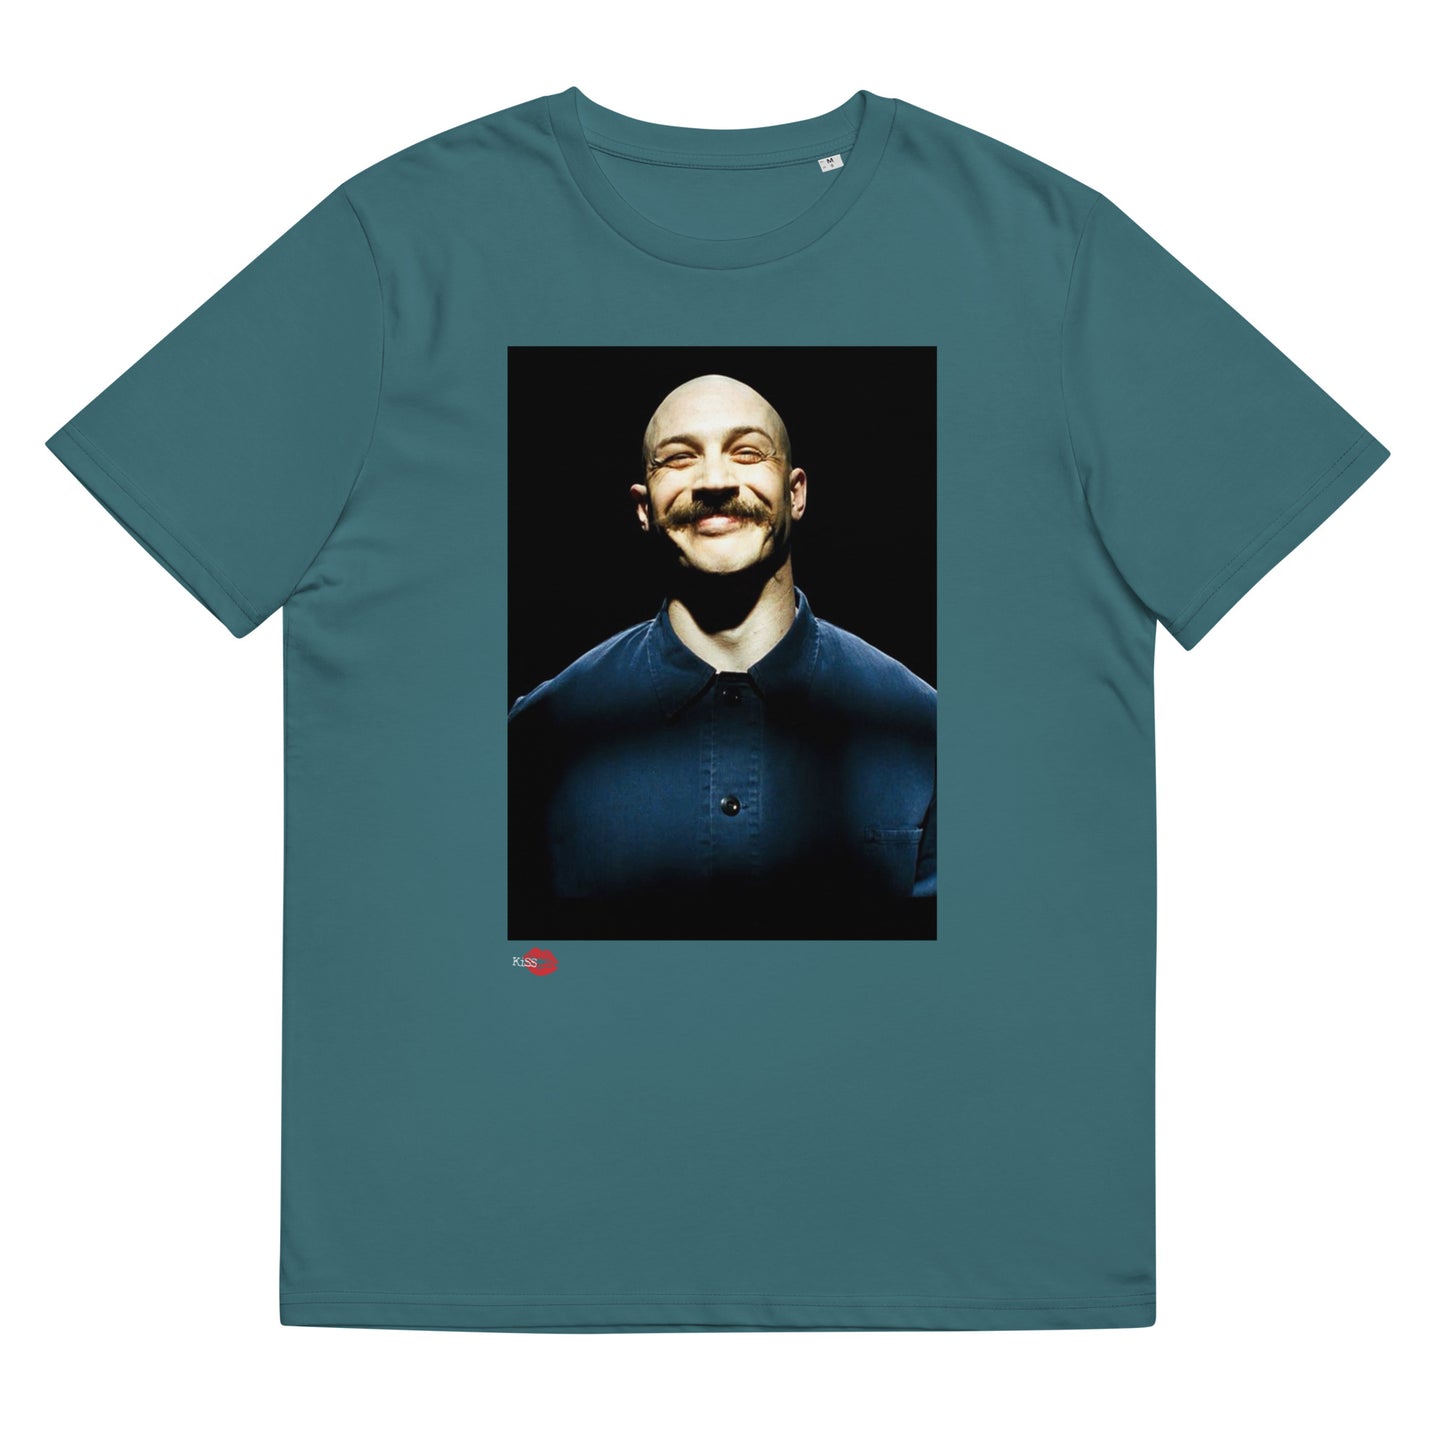 Charles Bronson Smile Unisex organic cotton t-shirt - Tom Hardy - Prison, Movie inspired - British - Happy - Movie Buff funny - Gift